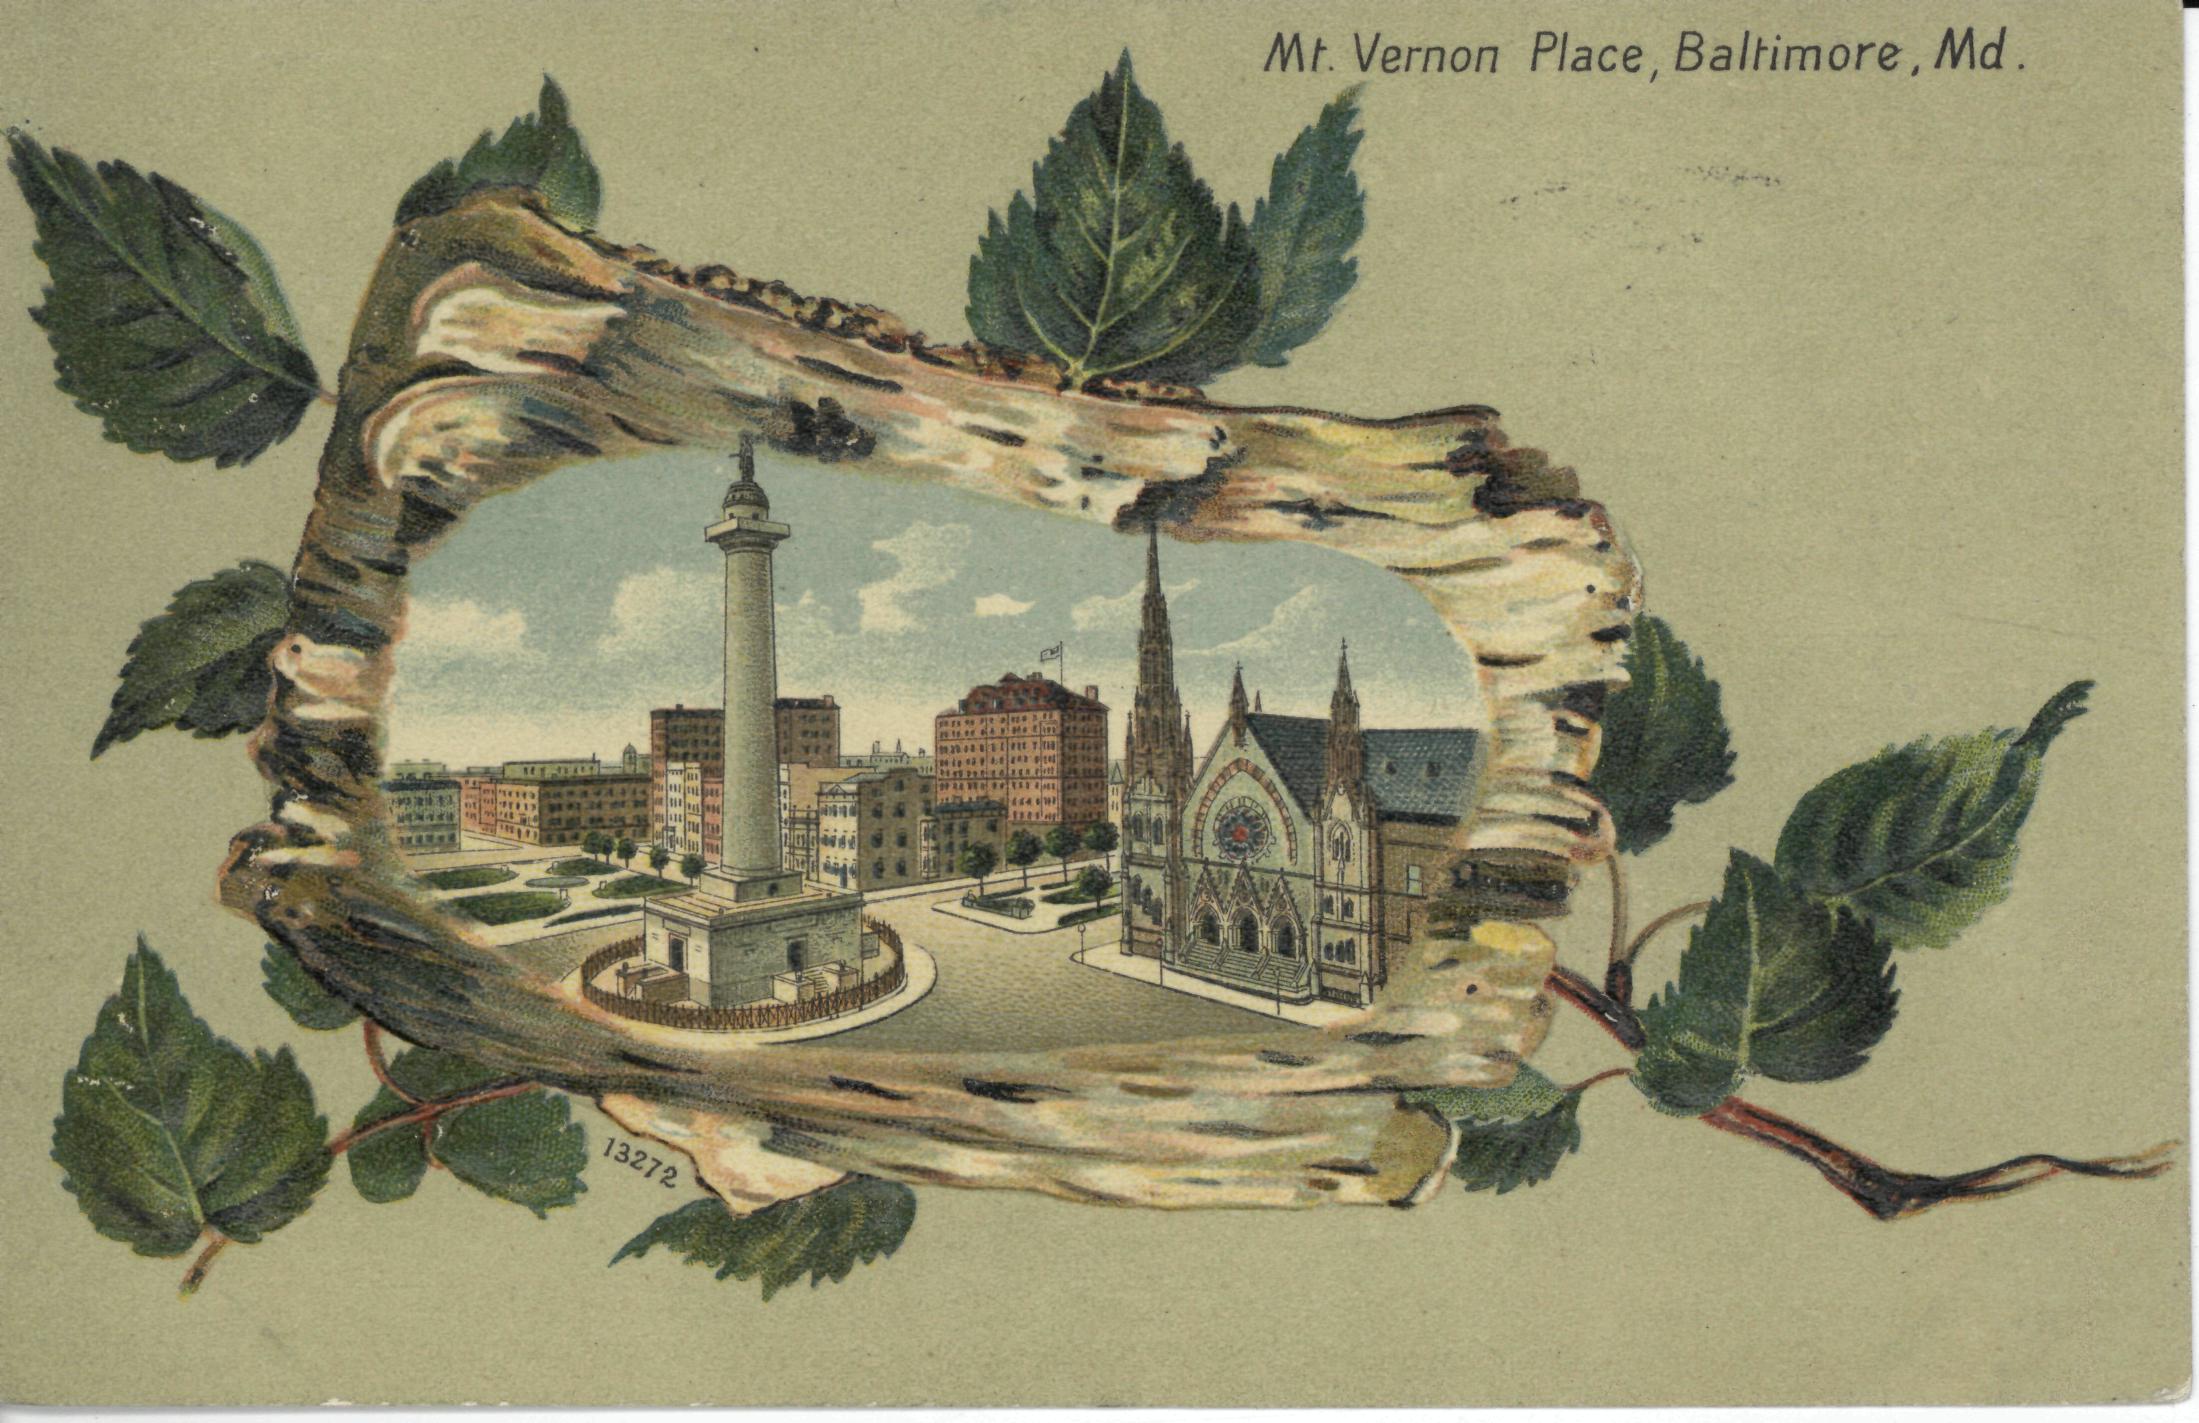 Postcard of Mt. Vernon Place circa 1910